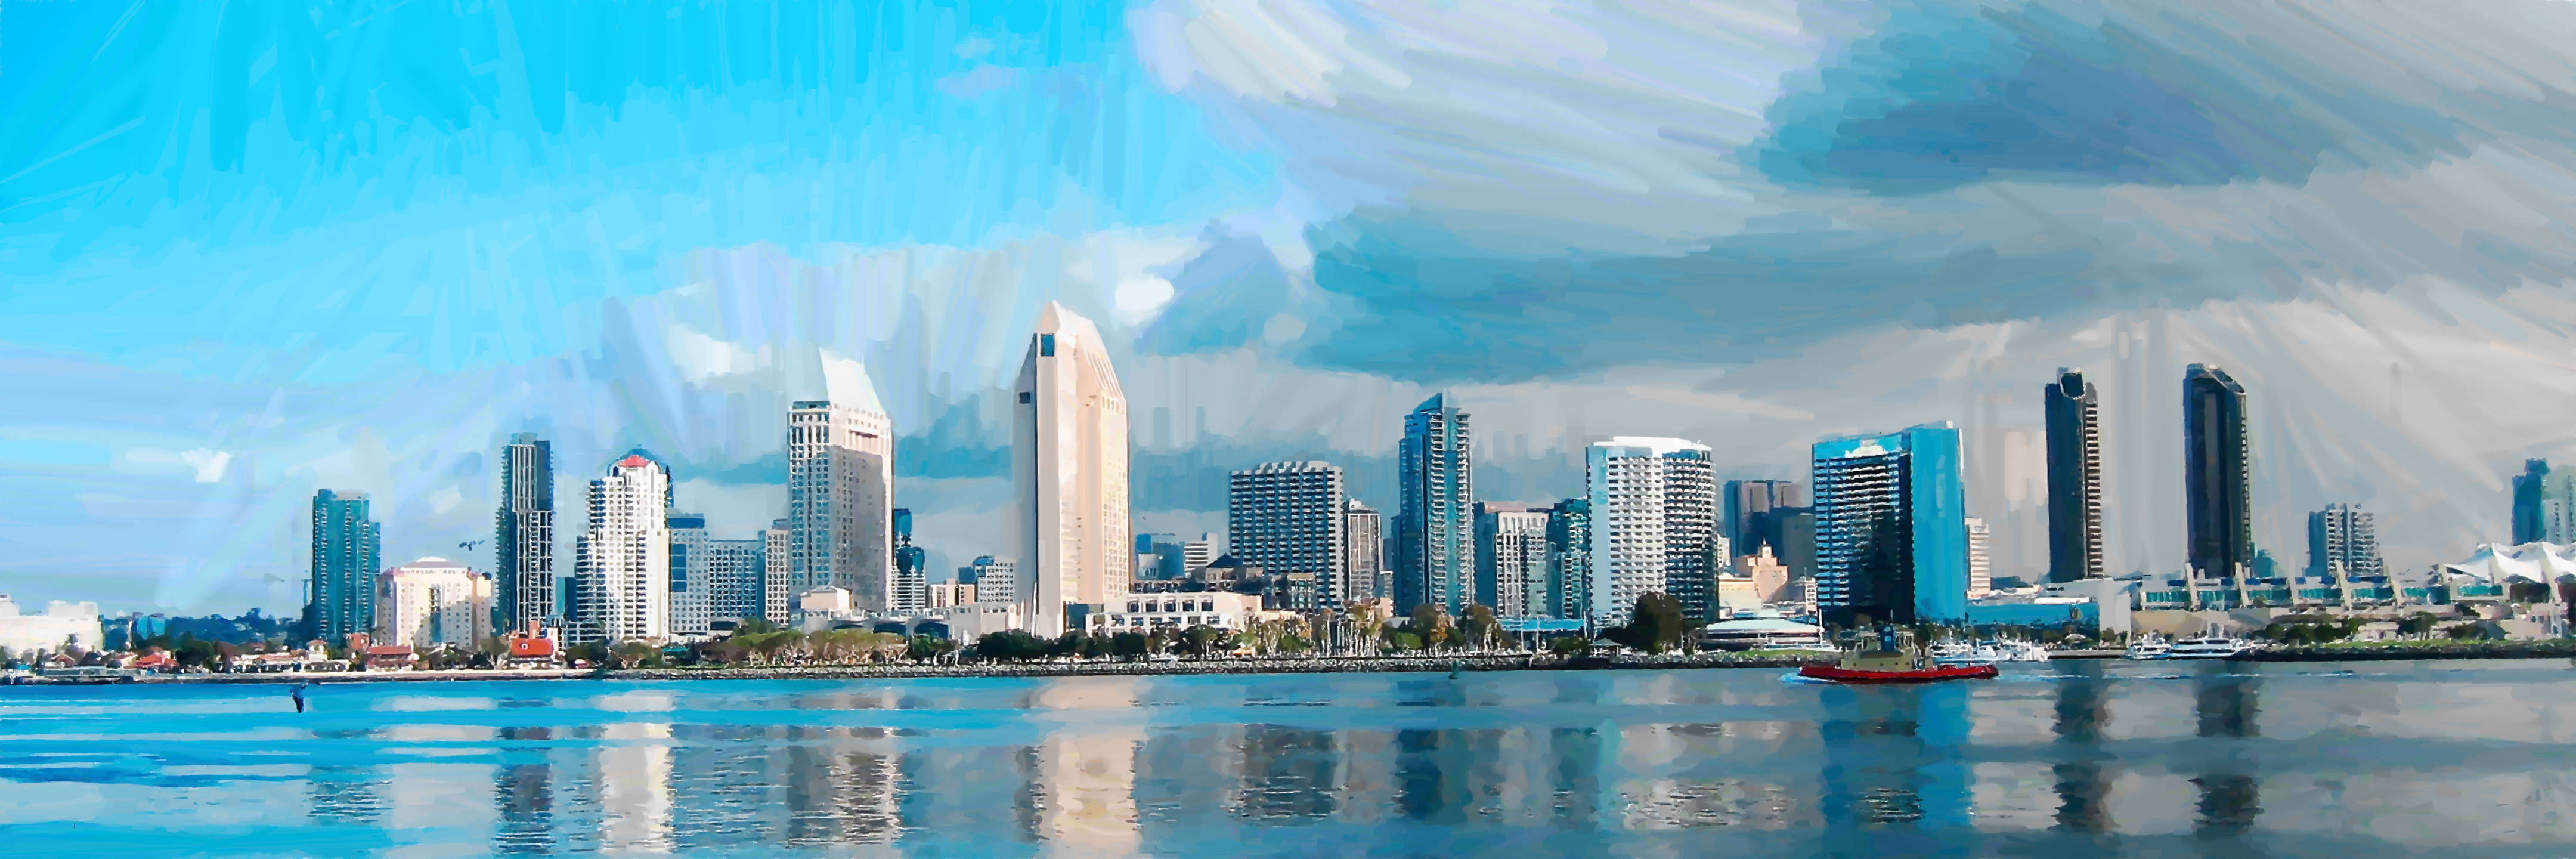 San Diego Panorama by maXX2707